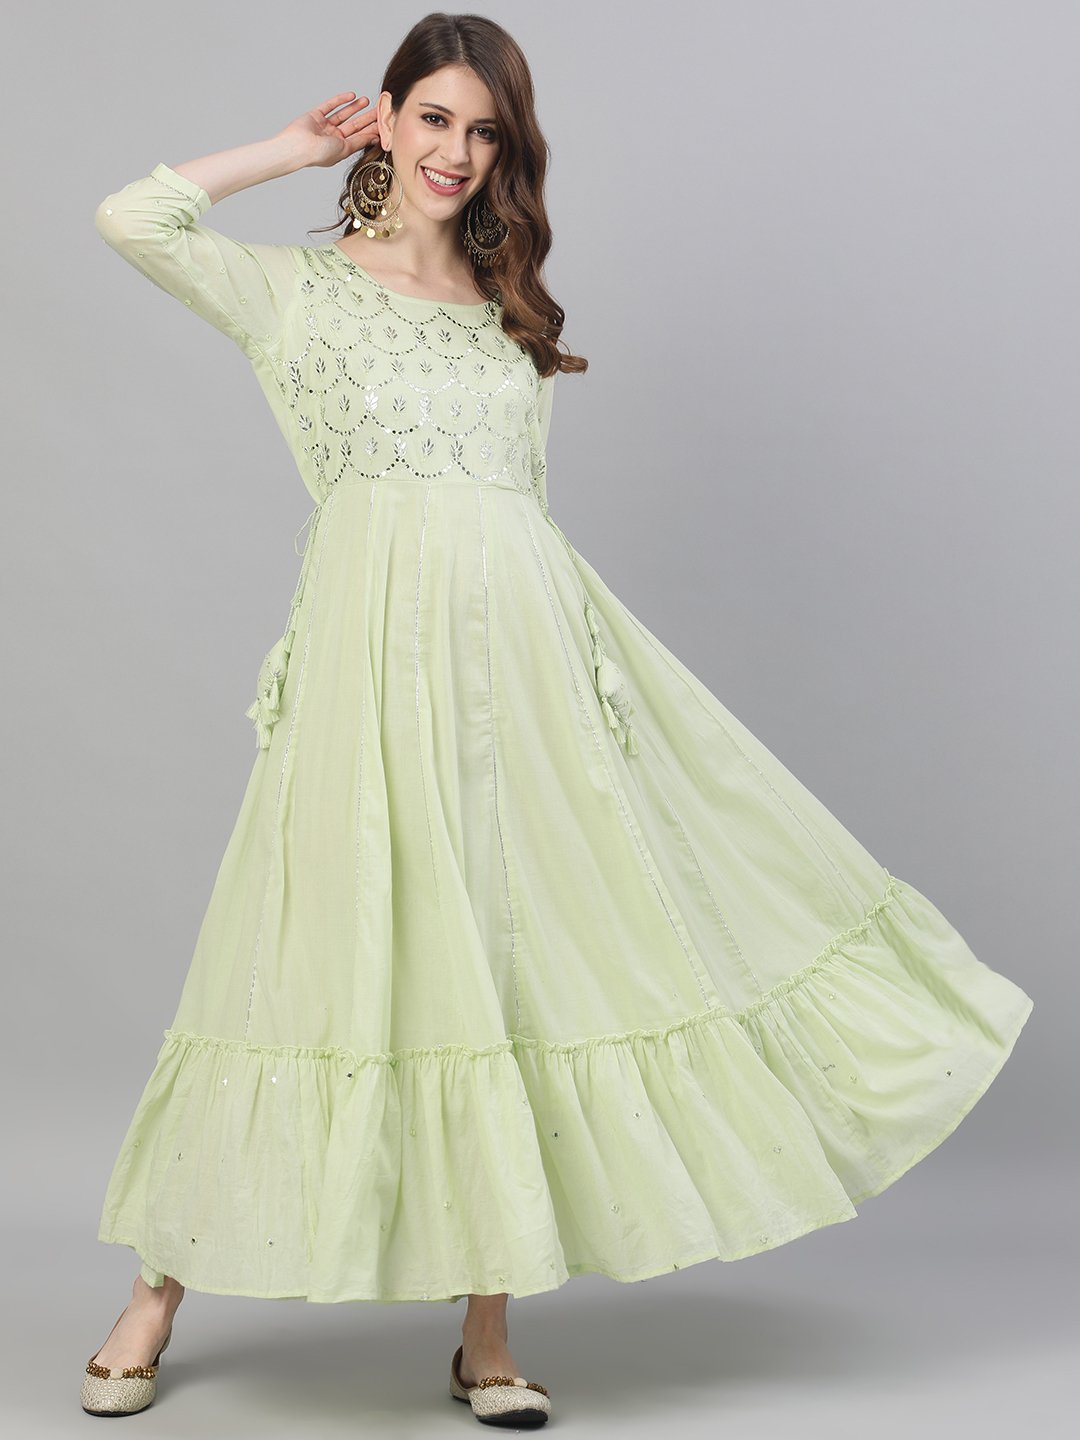 Ishin Women's Cotton Pista Green Embroidered Flared Dress